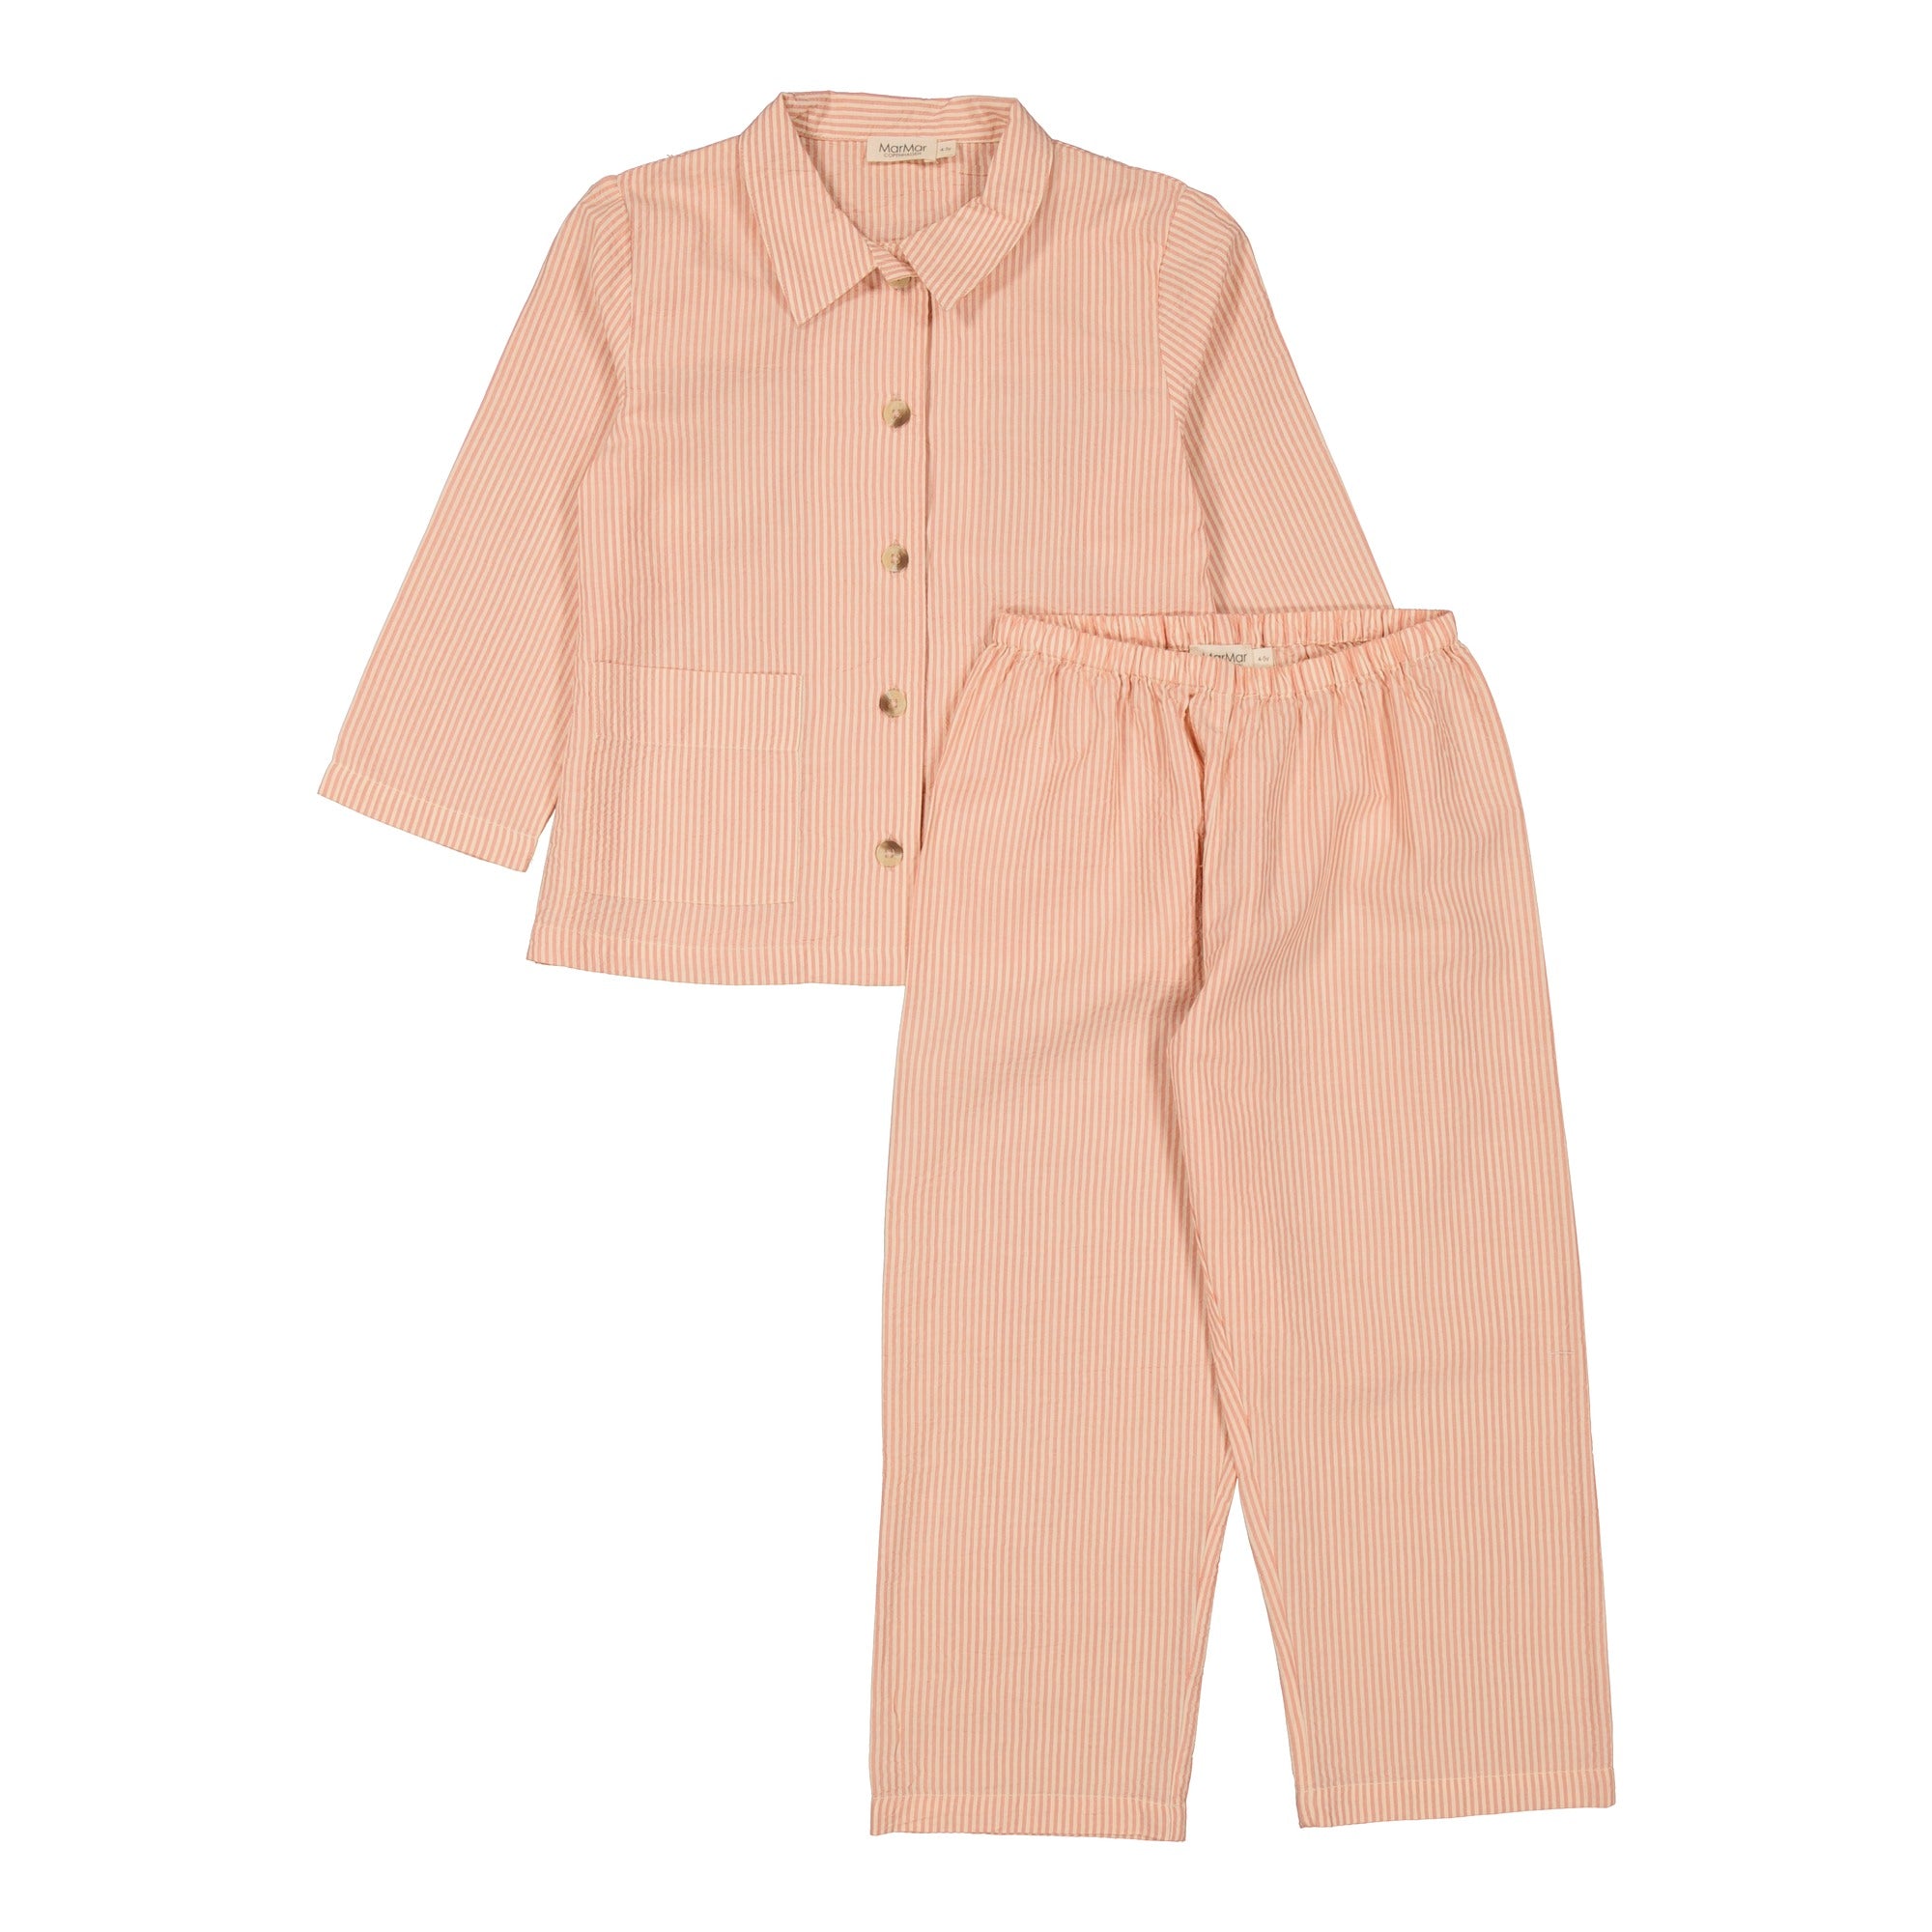 Boys & Girls Pink Stripes Cotton Nightwear Set